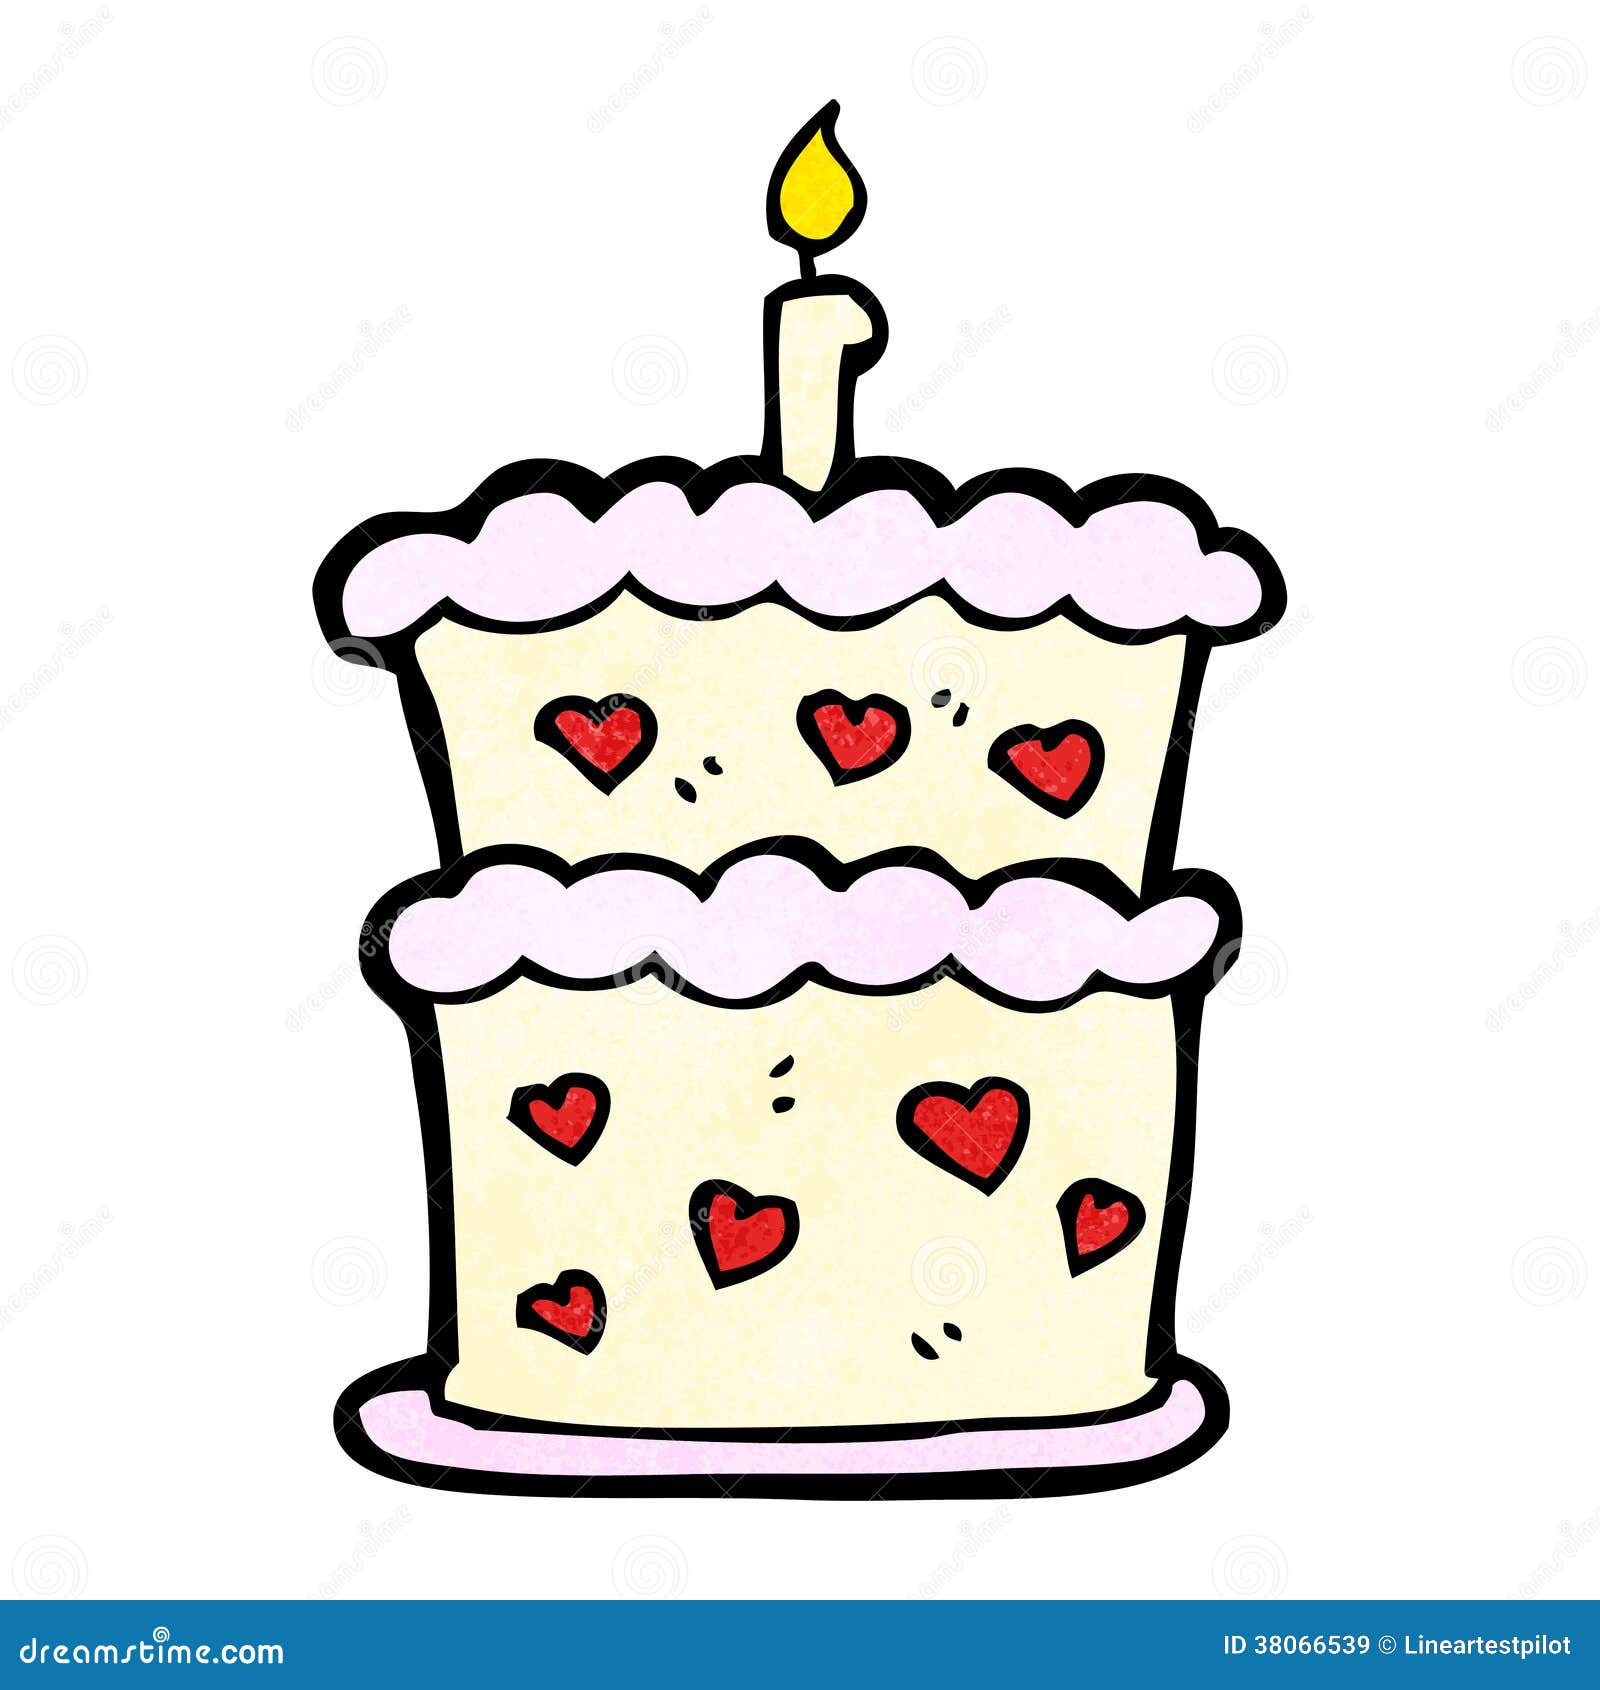 Cartoon Birthday Cake Royalty Free Stock Images - Image: 38066539